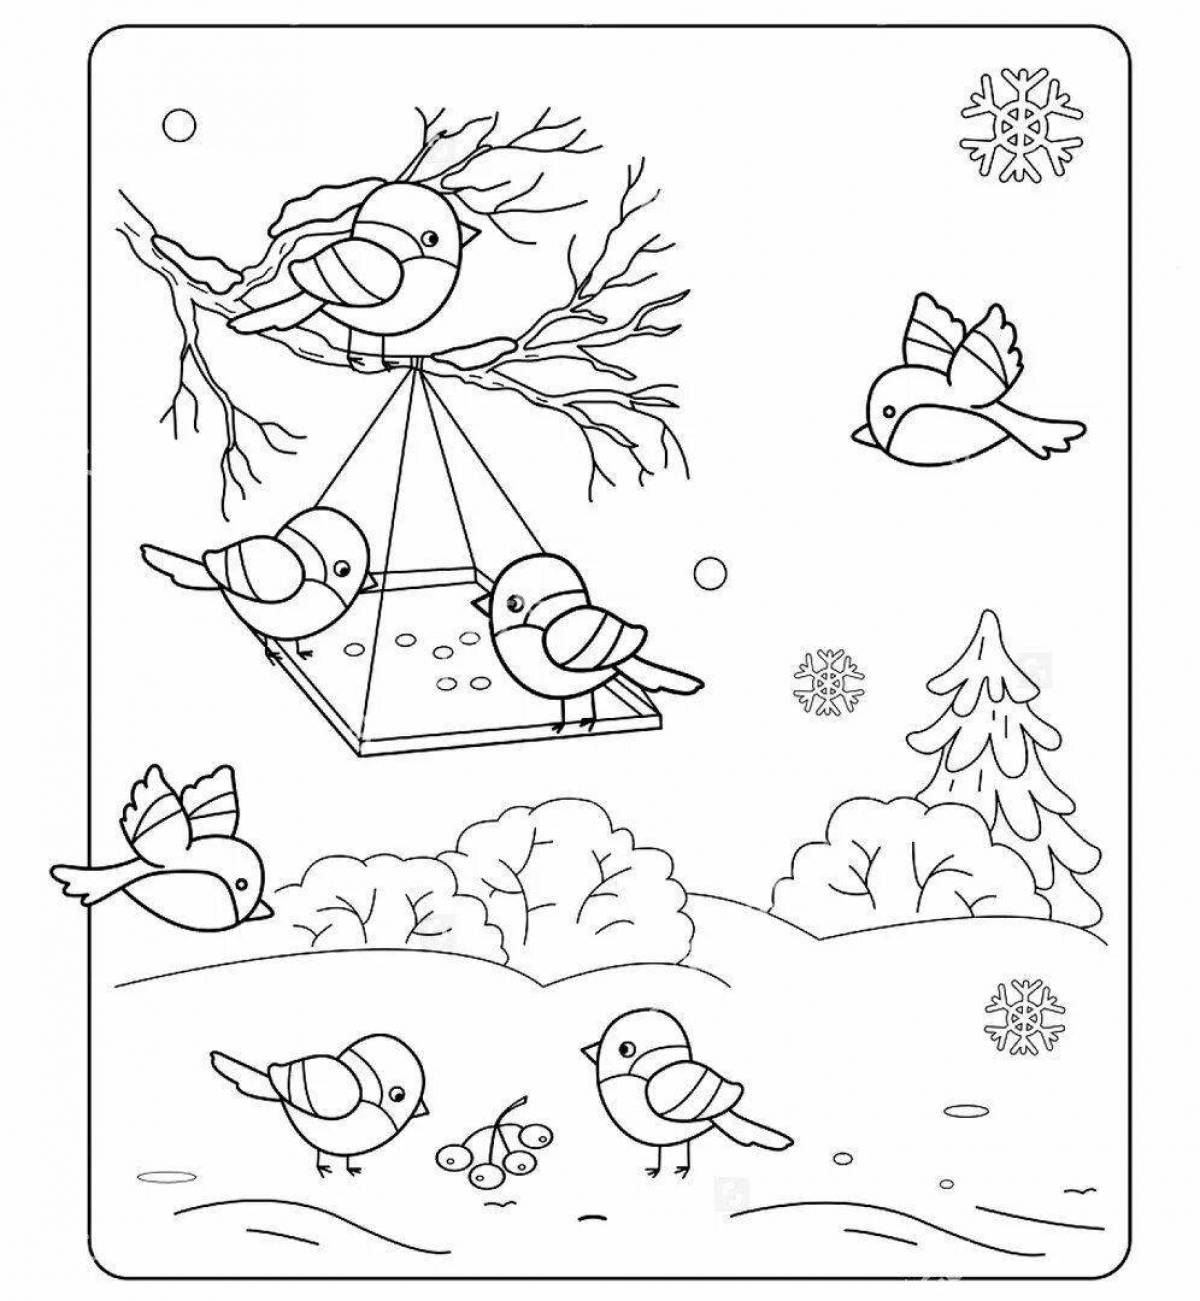 Fancy winter birds coloring page